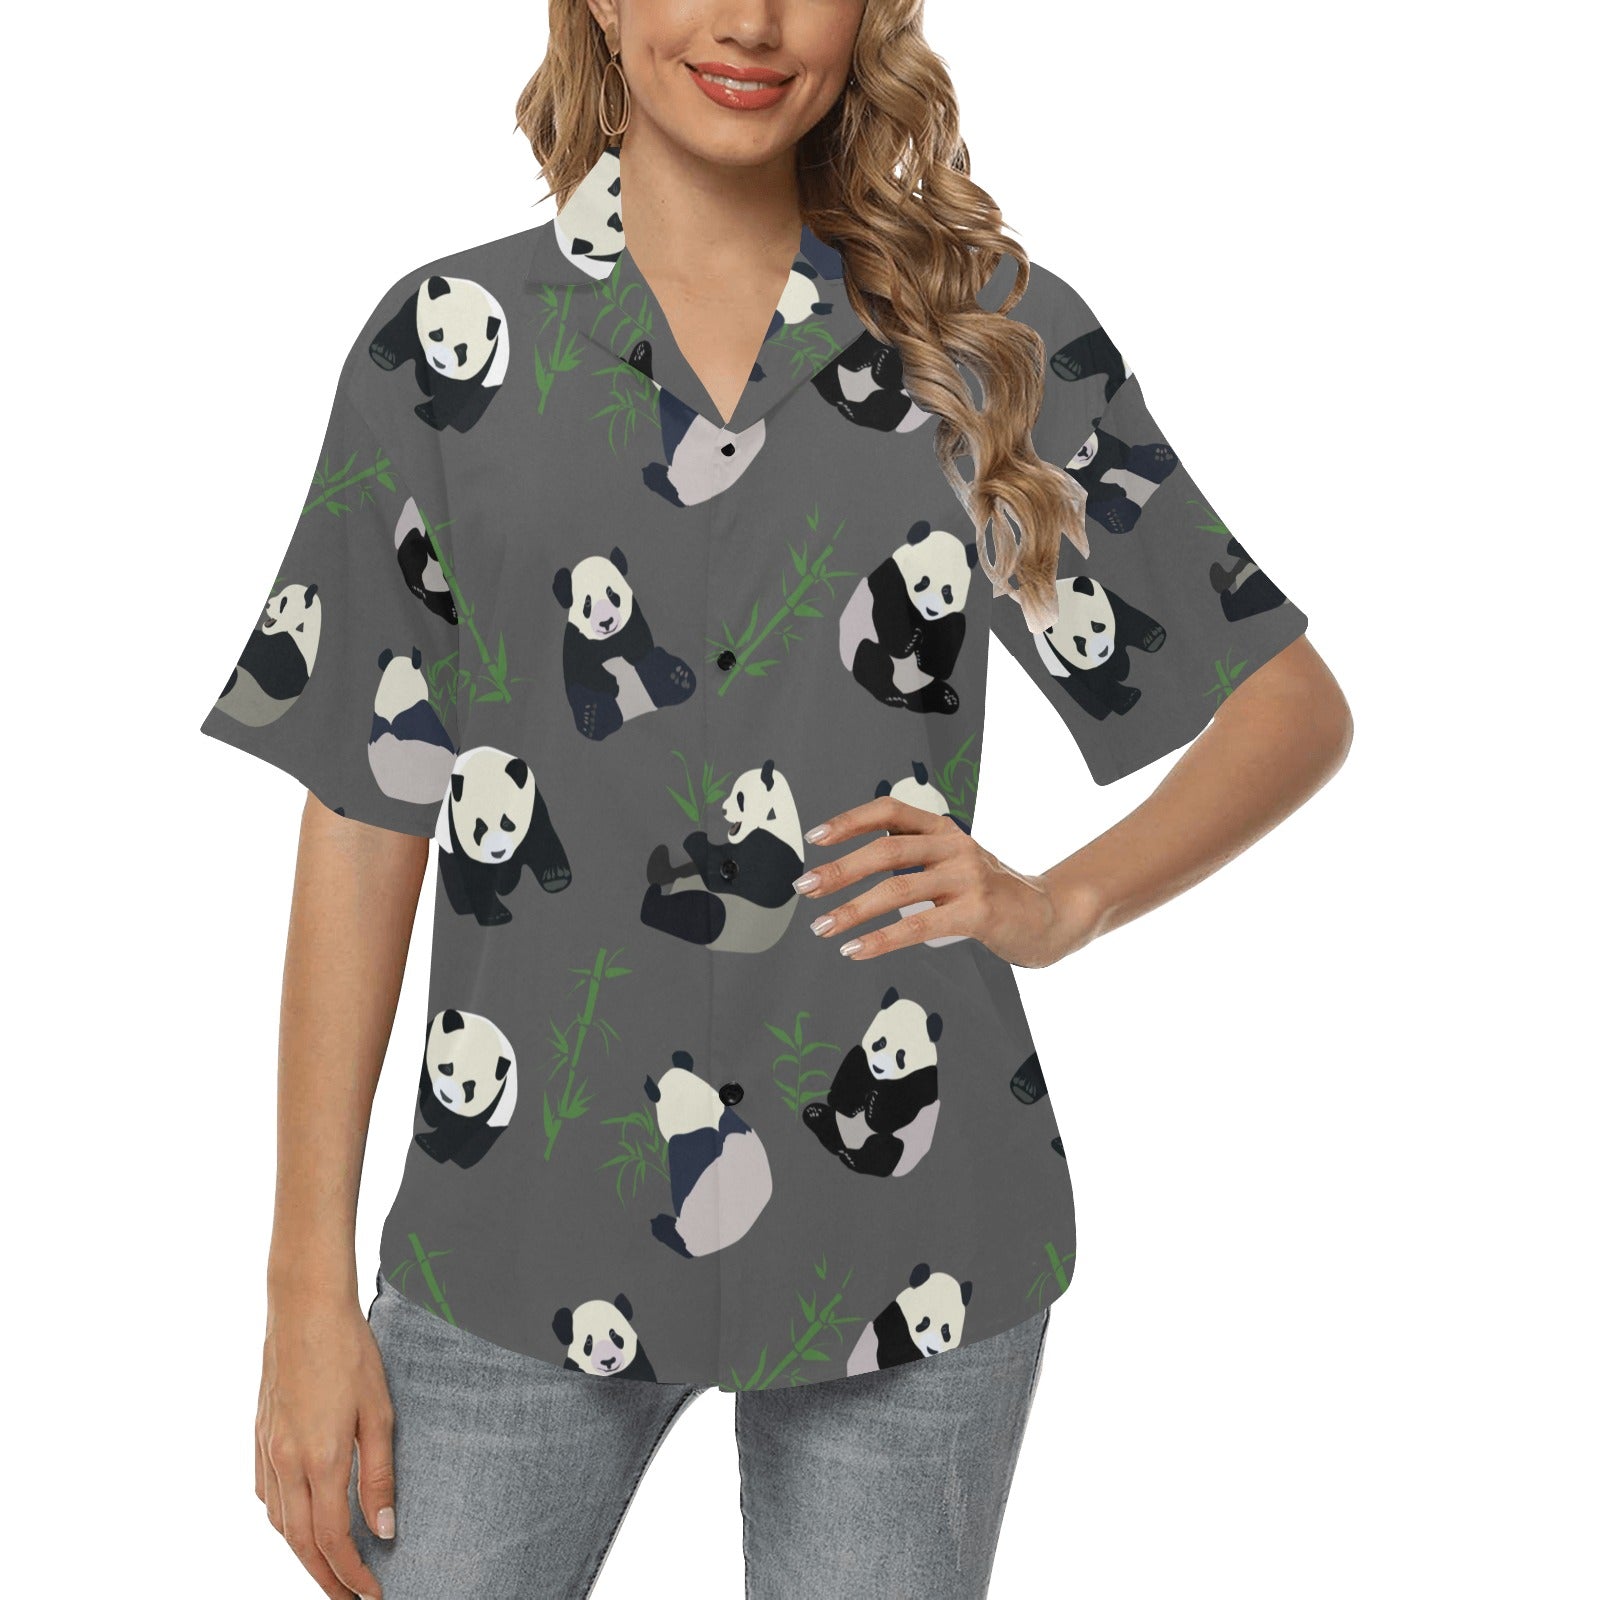 Panda Pattern Print Design A06 Women's Hawaiian Shirt